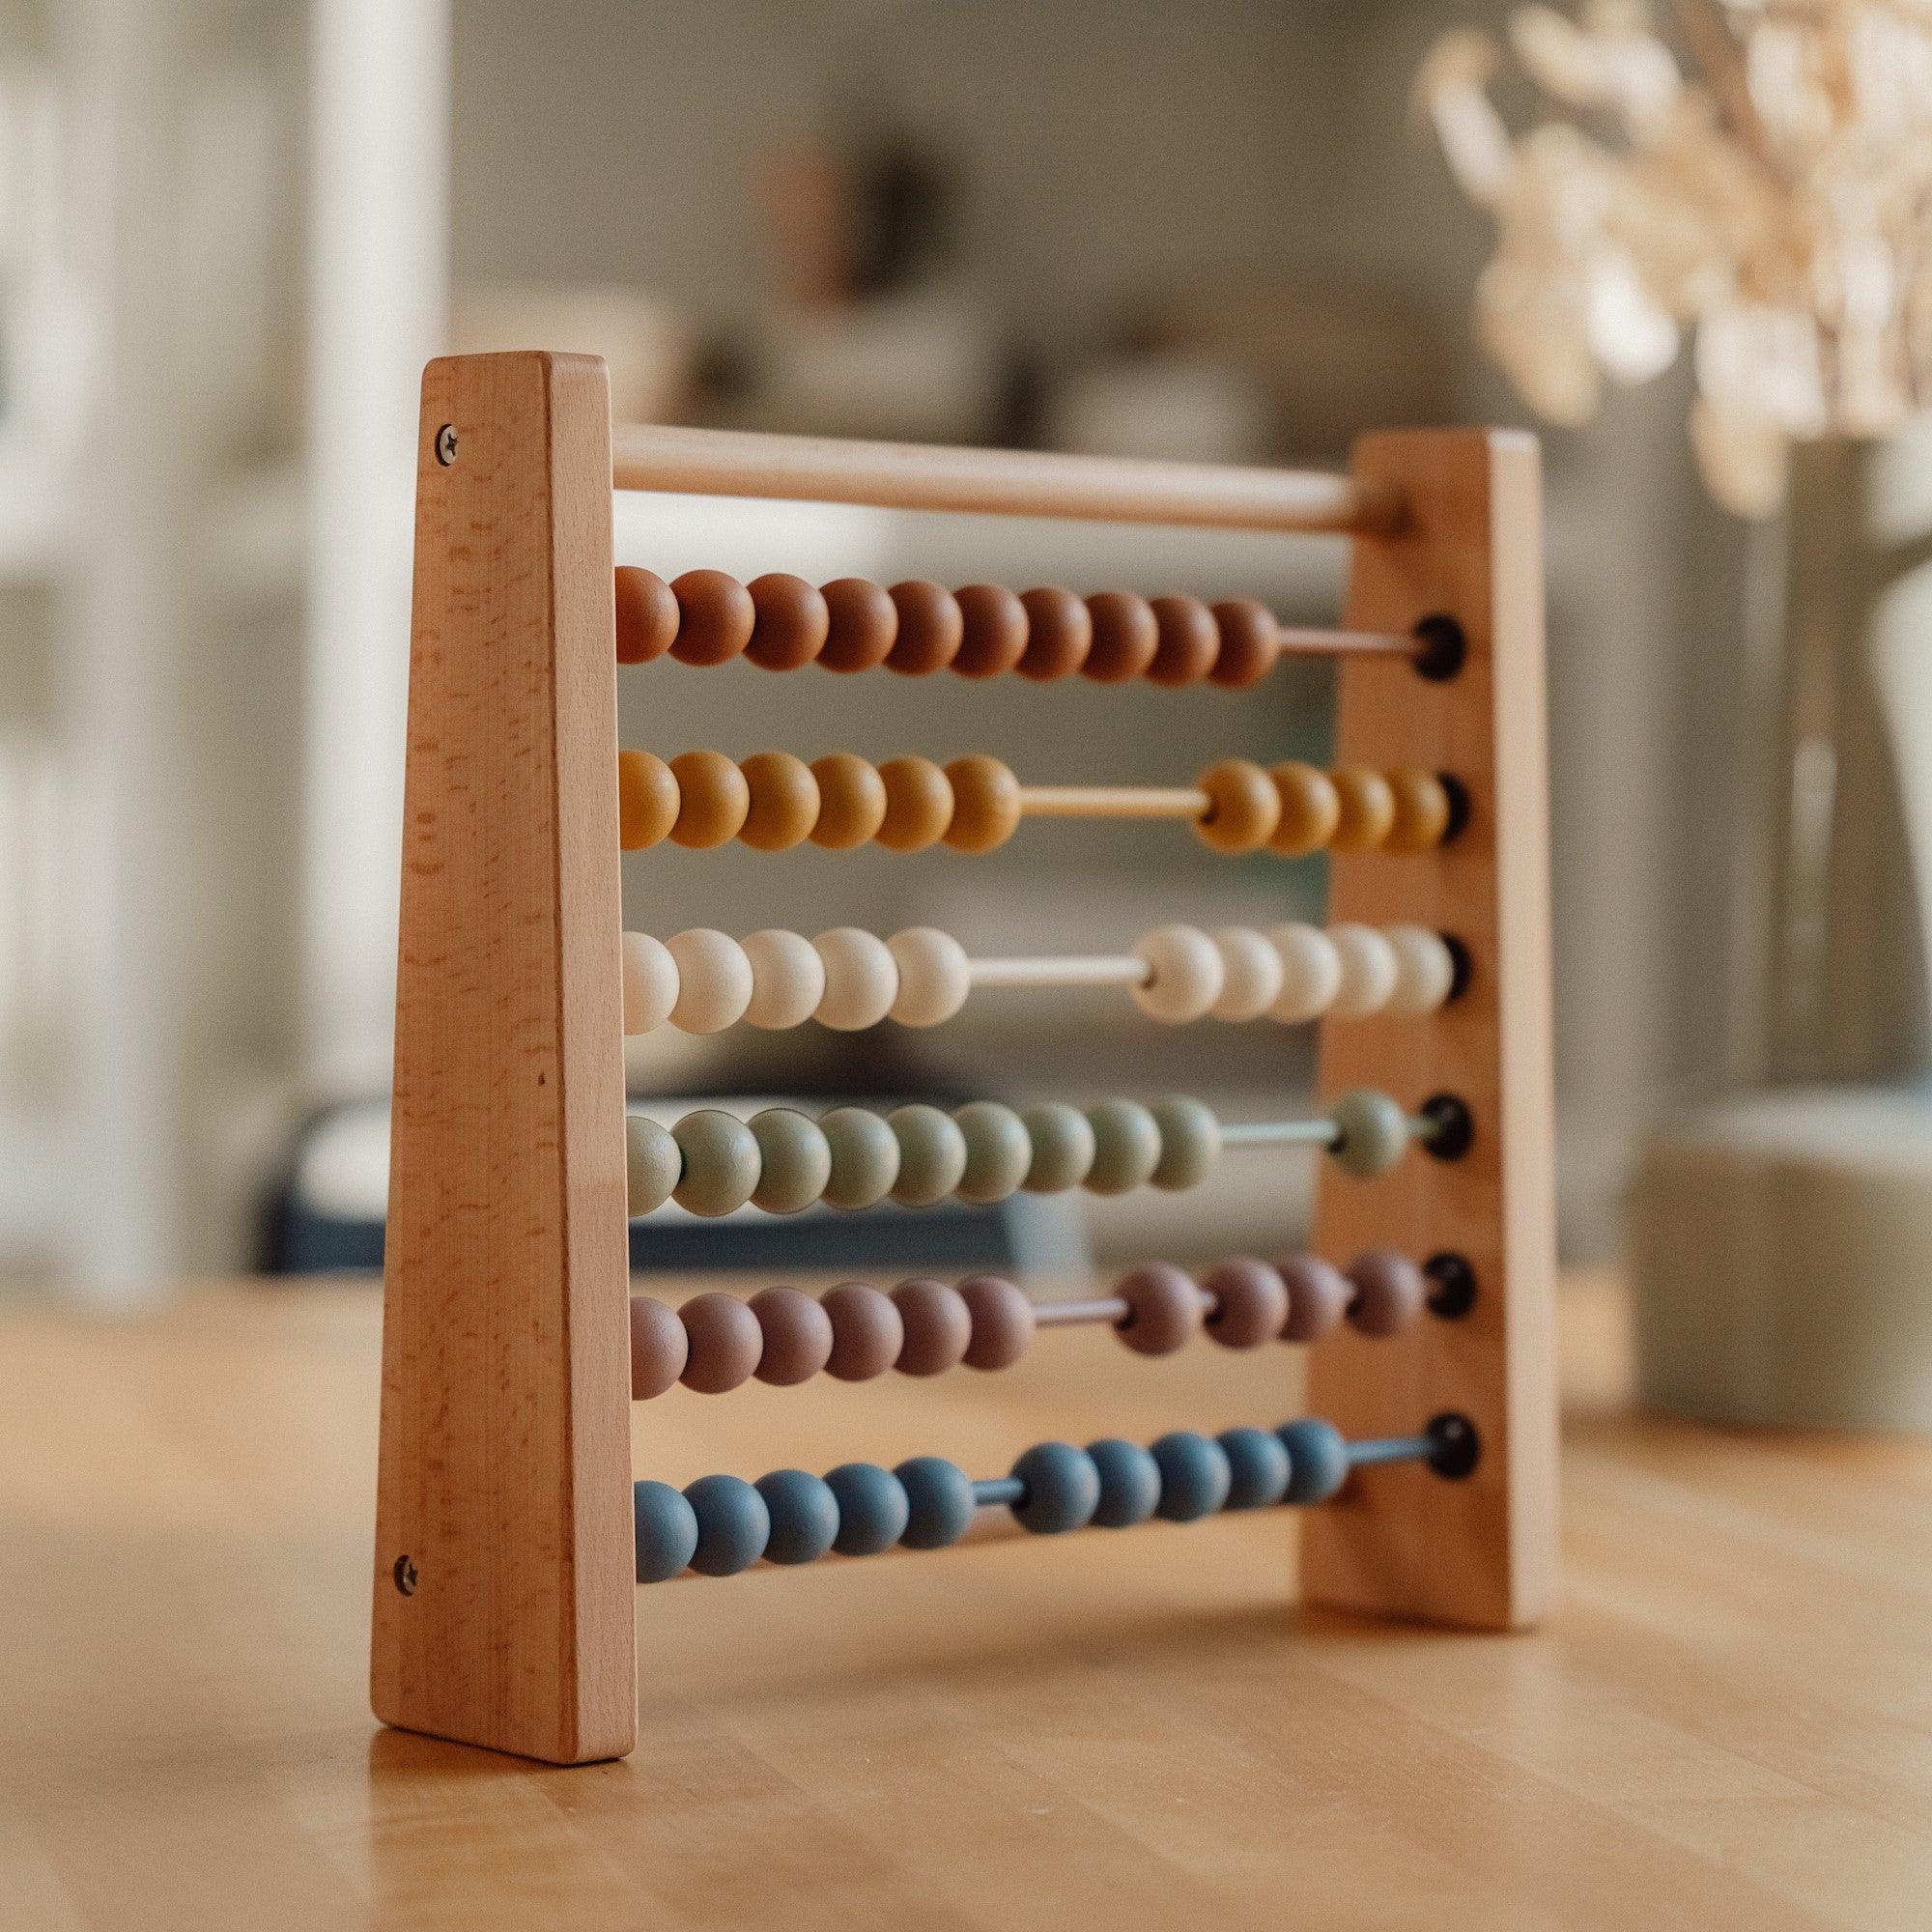 Kis holland: Vintage Wooden Abacus